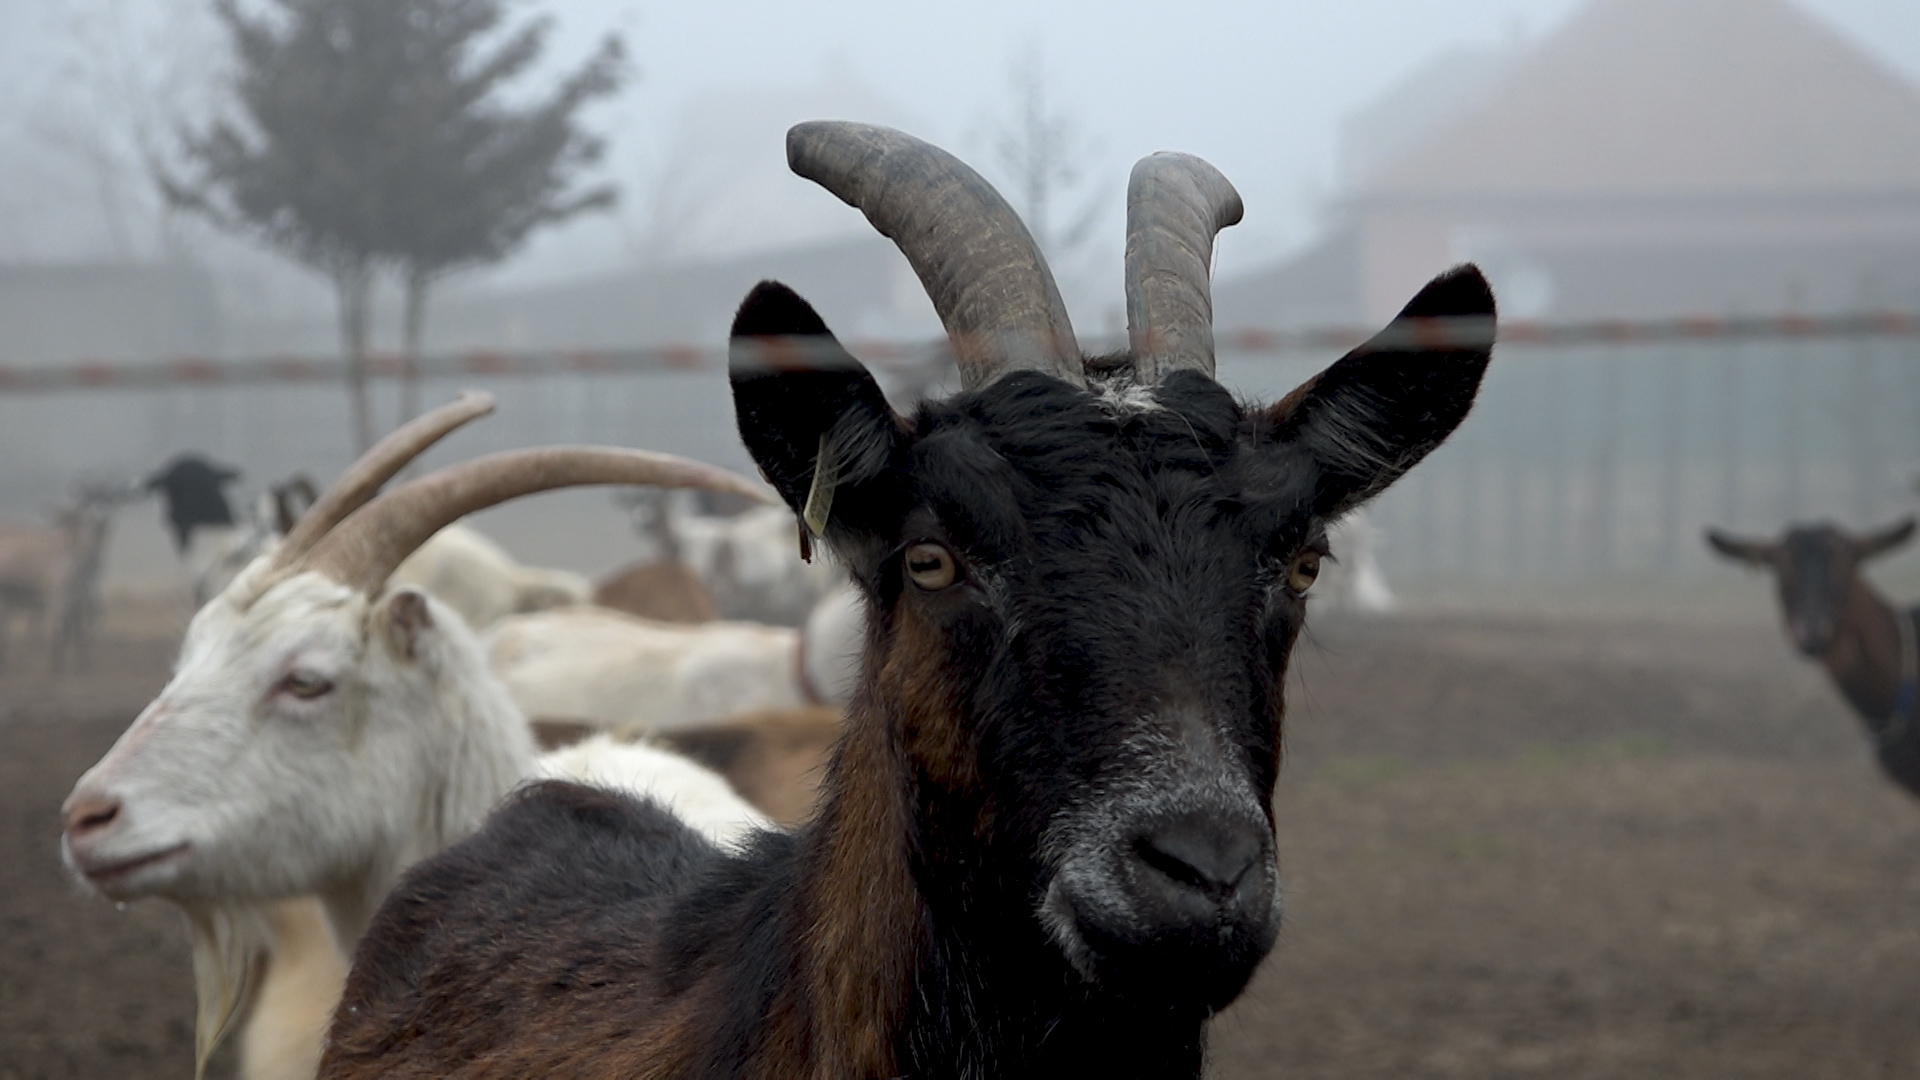 Hungarian goat farm offers work lifeline for marginalized communities